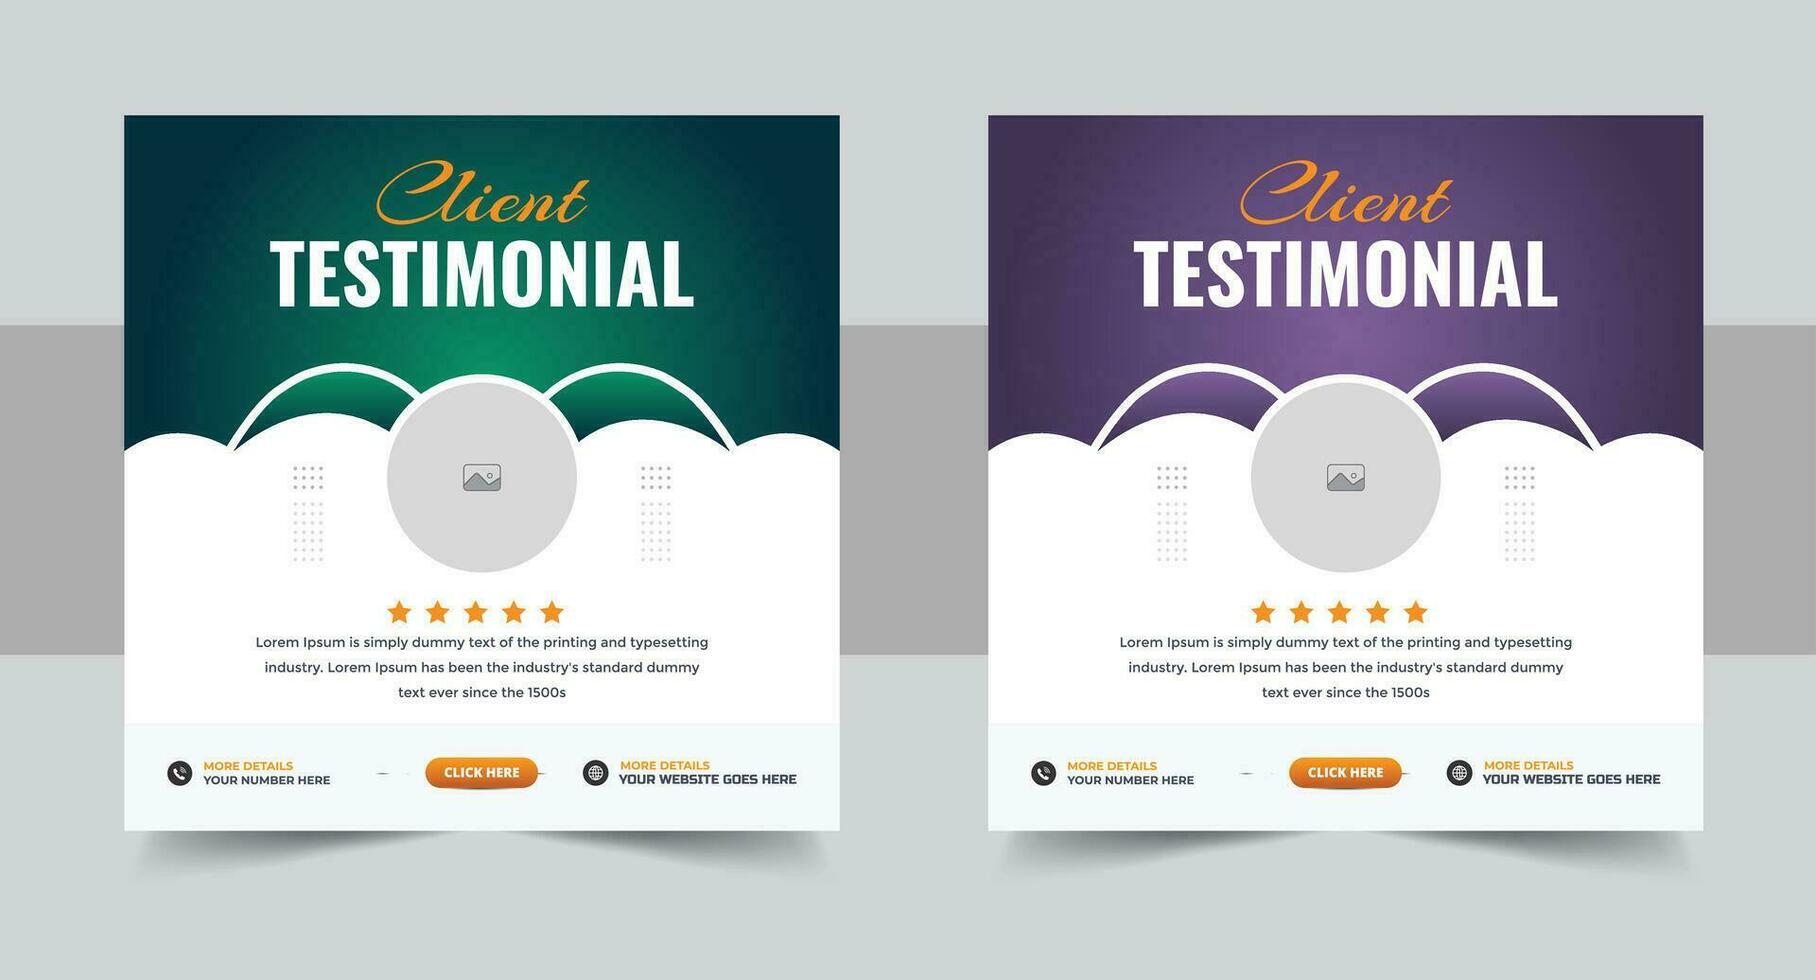 Client testimonials or customer feedback social media post web banner template, Customer service client feedback review social media post vector